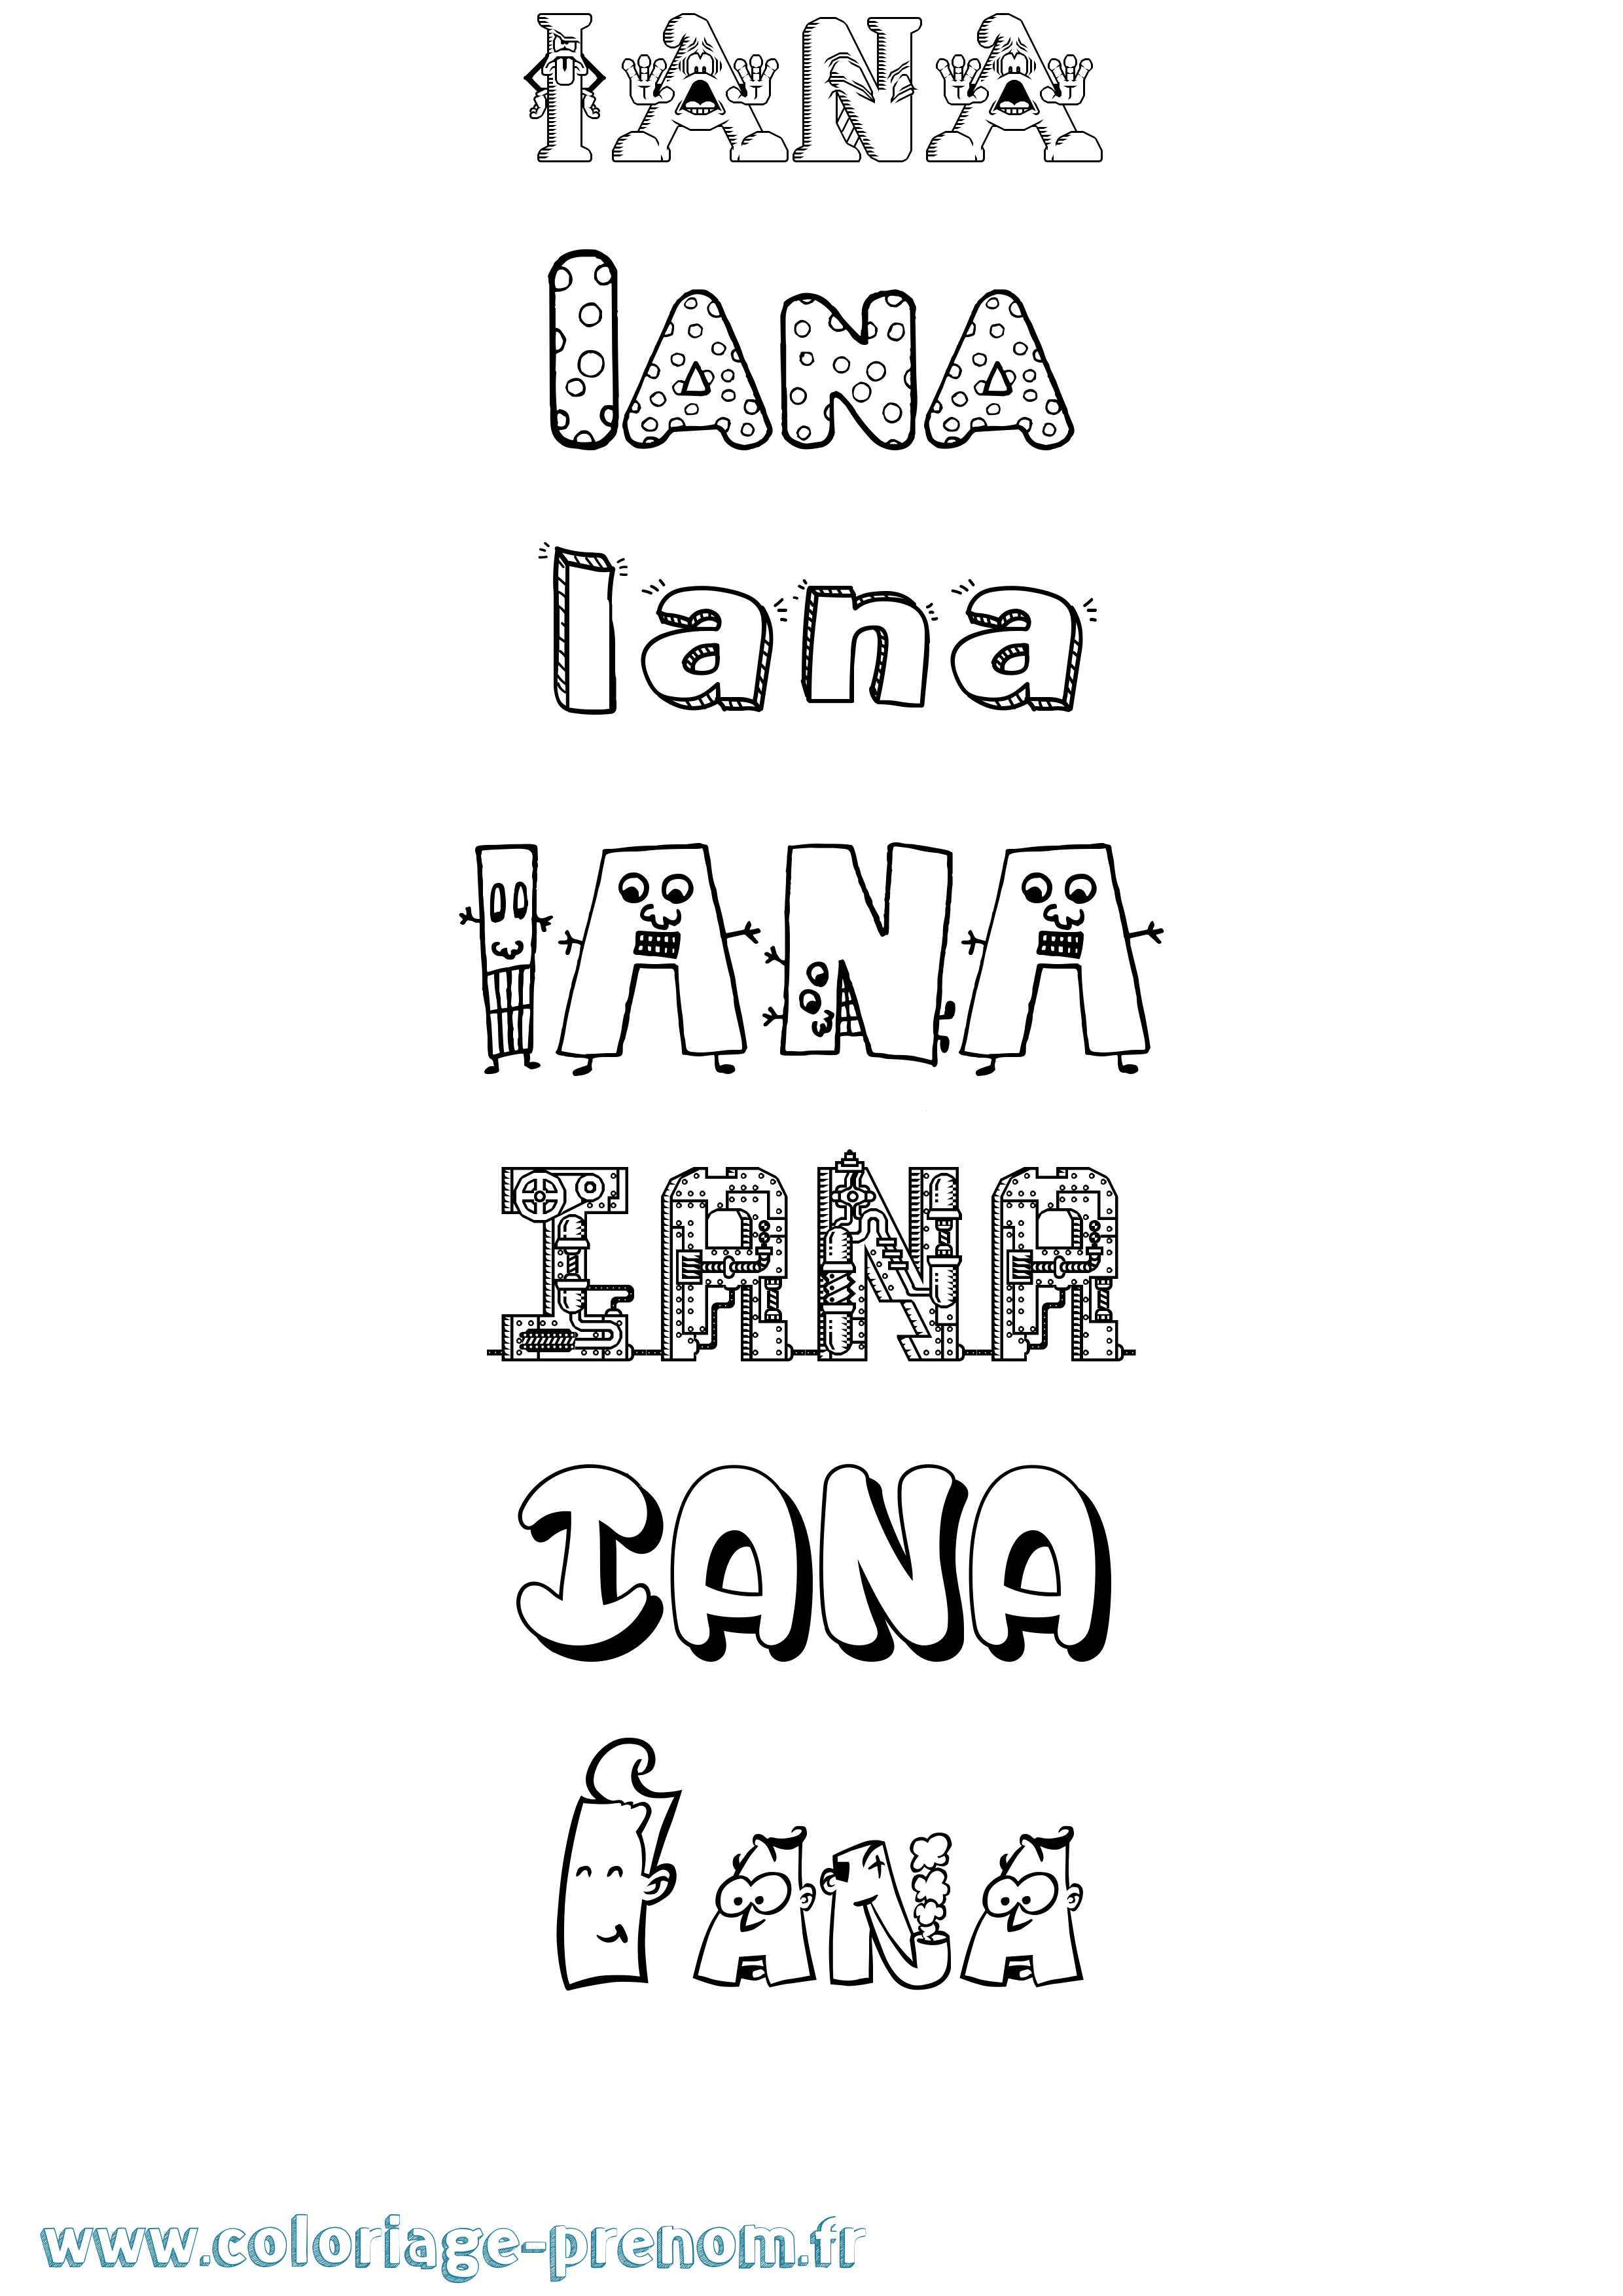 Coloriage prénom Iana Fun